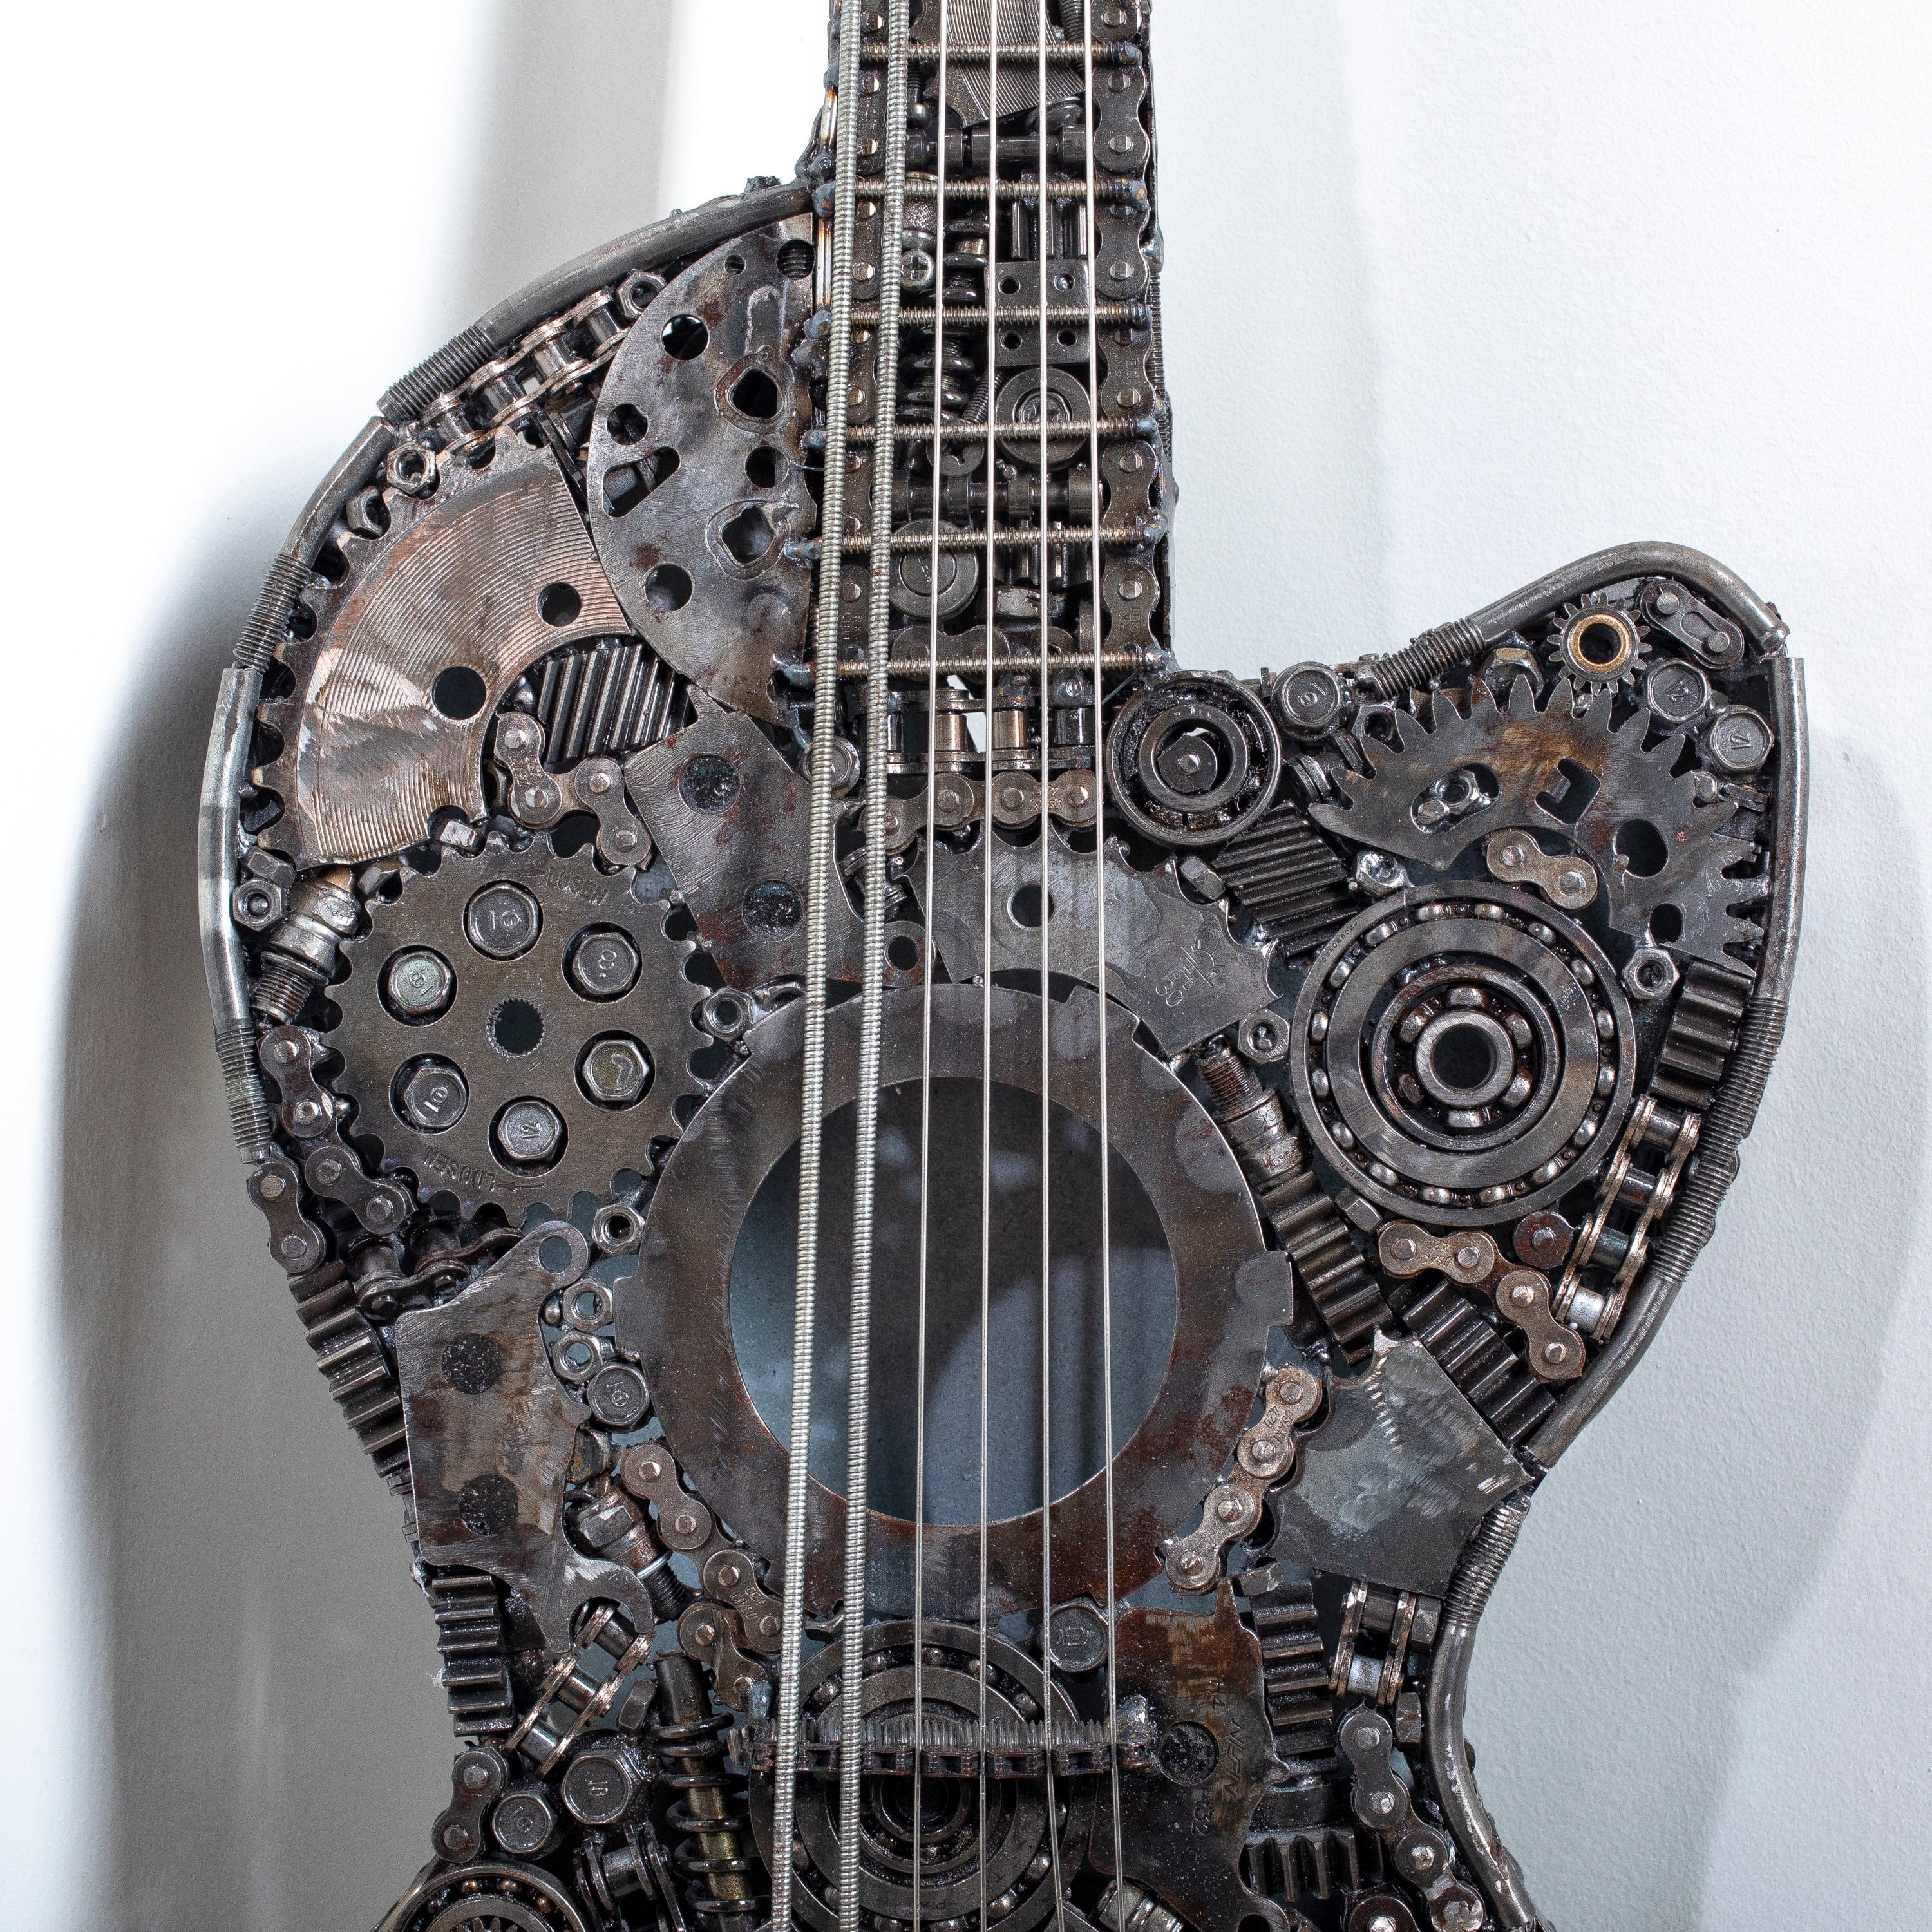 KALIFANO Recycled Metal Art 48" Guitar Inspired Recycled Metal Art Sculpture RMS-GT123-PK